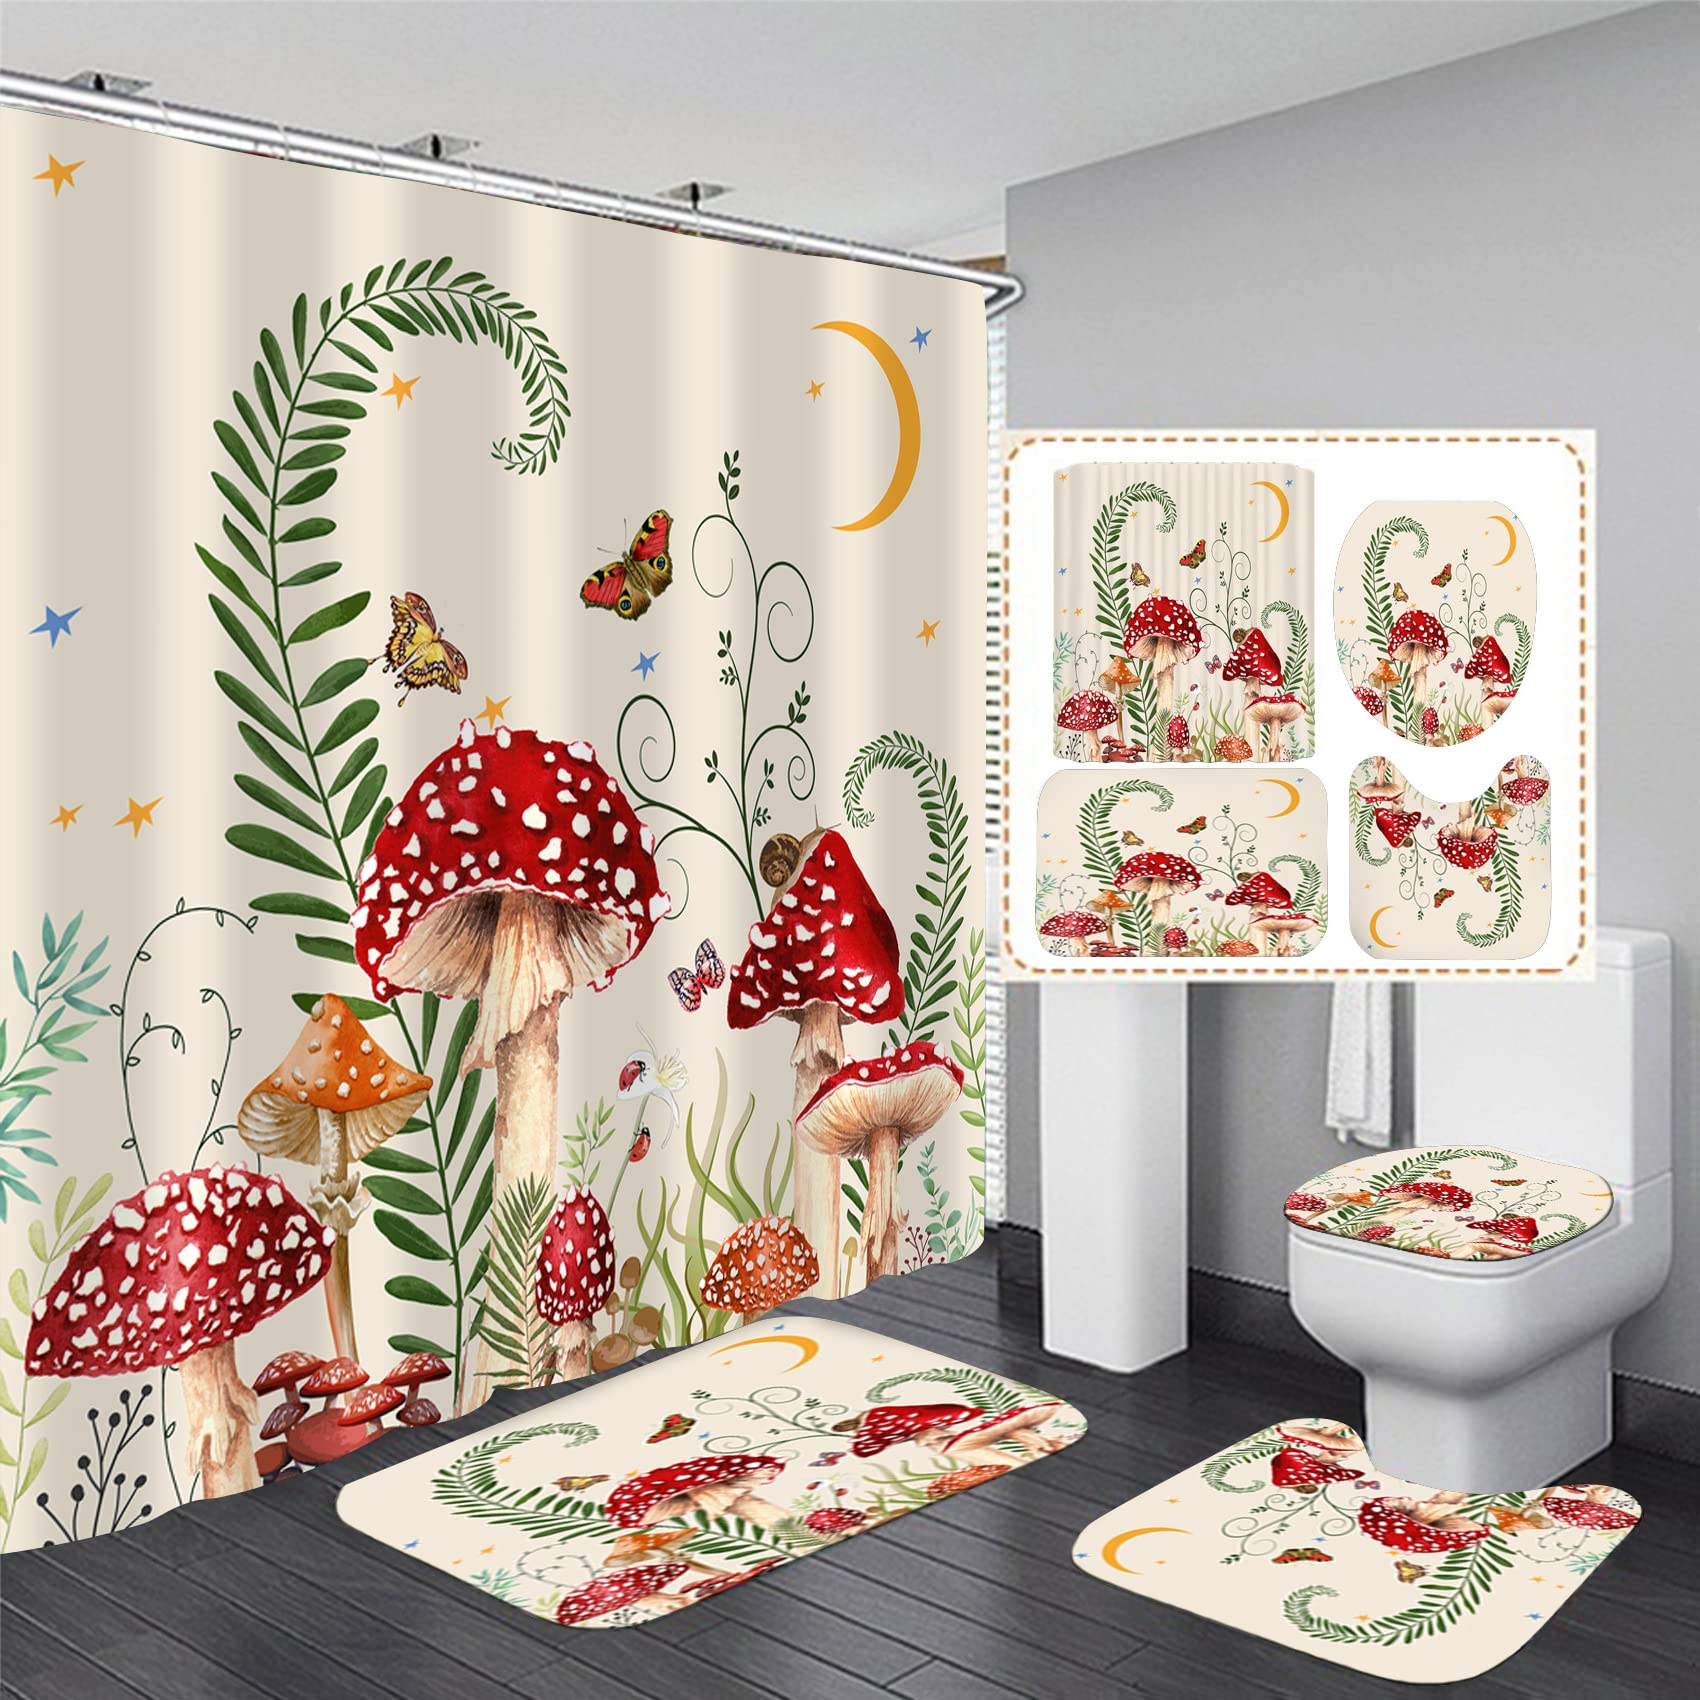 

4pcs Bathroom Sets Rugs Shower Curtain, Mushroom Butterfly Pattern Waterproof Polyester Shower Curtain With Hooks, Non-slip Bathroom Rug, Toilet U-shape Mat, Toilet Lid Cover Pad, Bathroom Decor